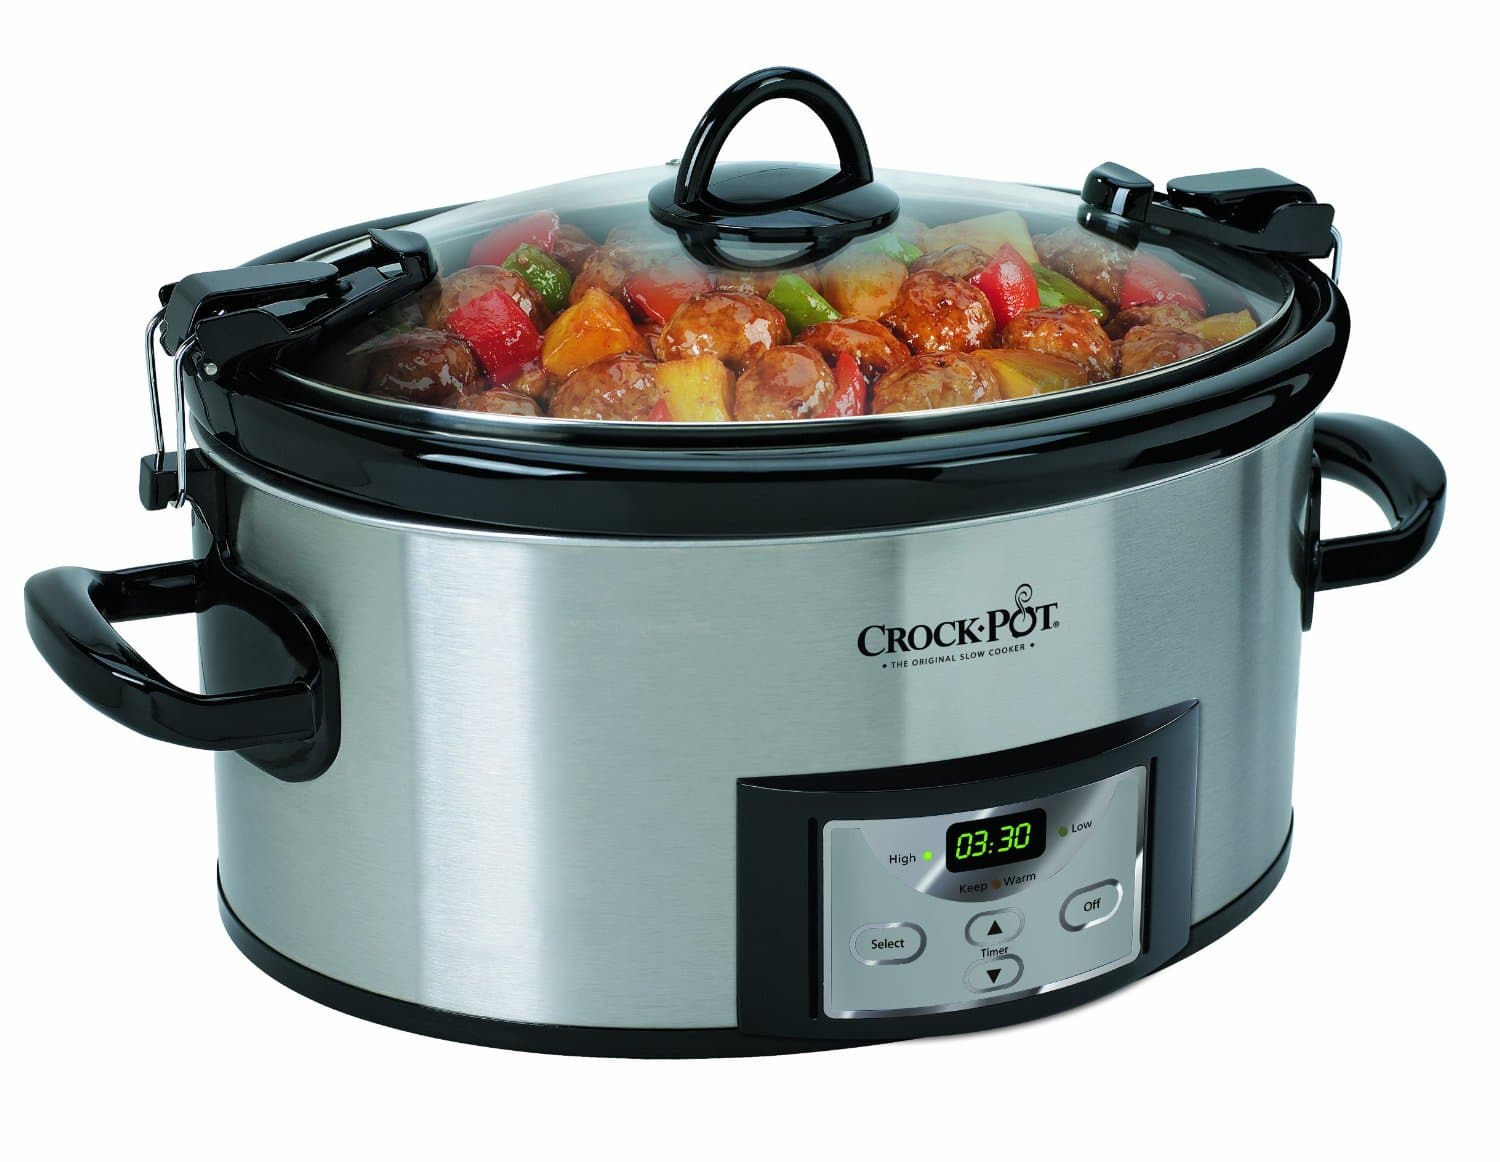 LIGHTNING DEAL ALERT! Crock-Pot 6-Quart Programmable Slow Cooker, Digital Timer, Stainless Steel – 43% off!!